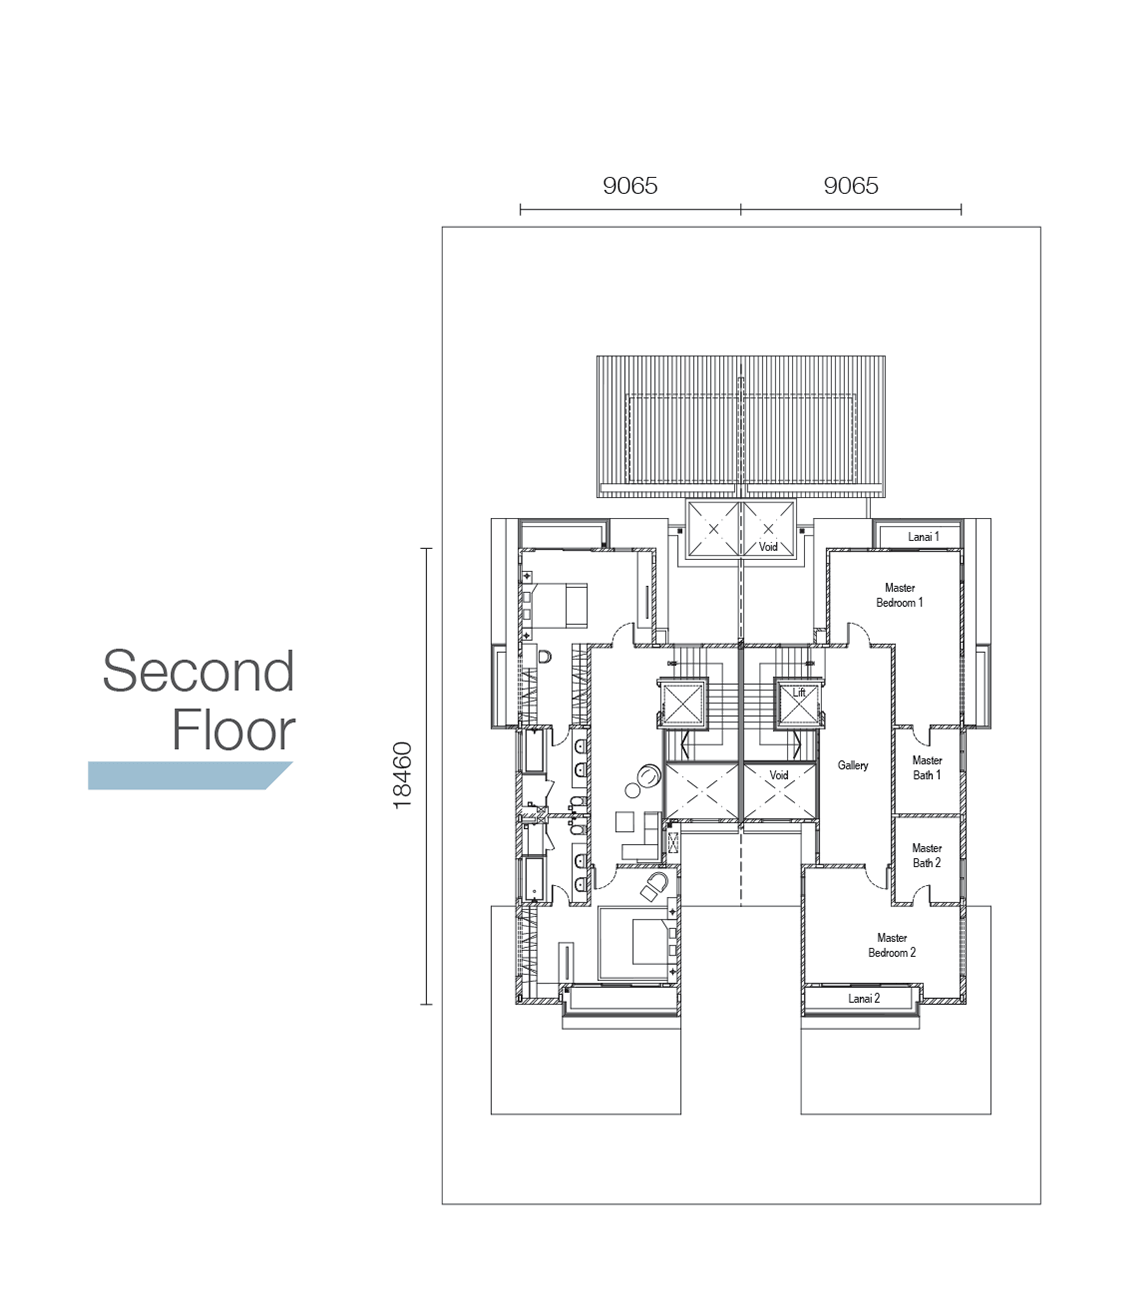 Sierra Hijauan - Type RB6 - Second Floor Layout Plan